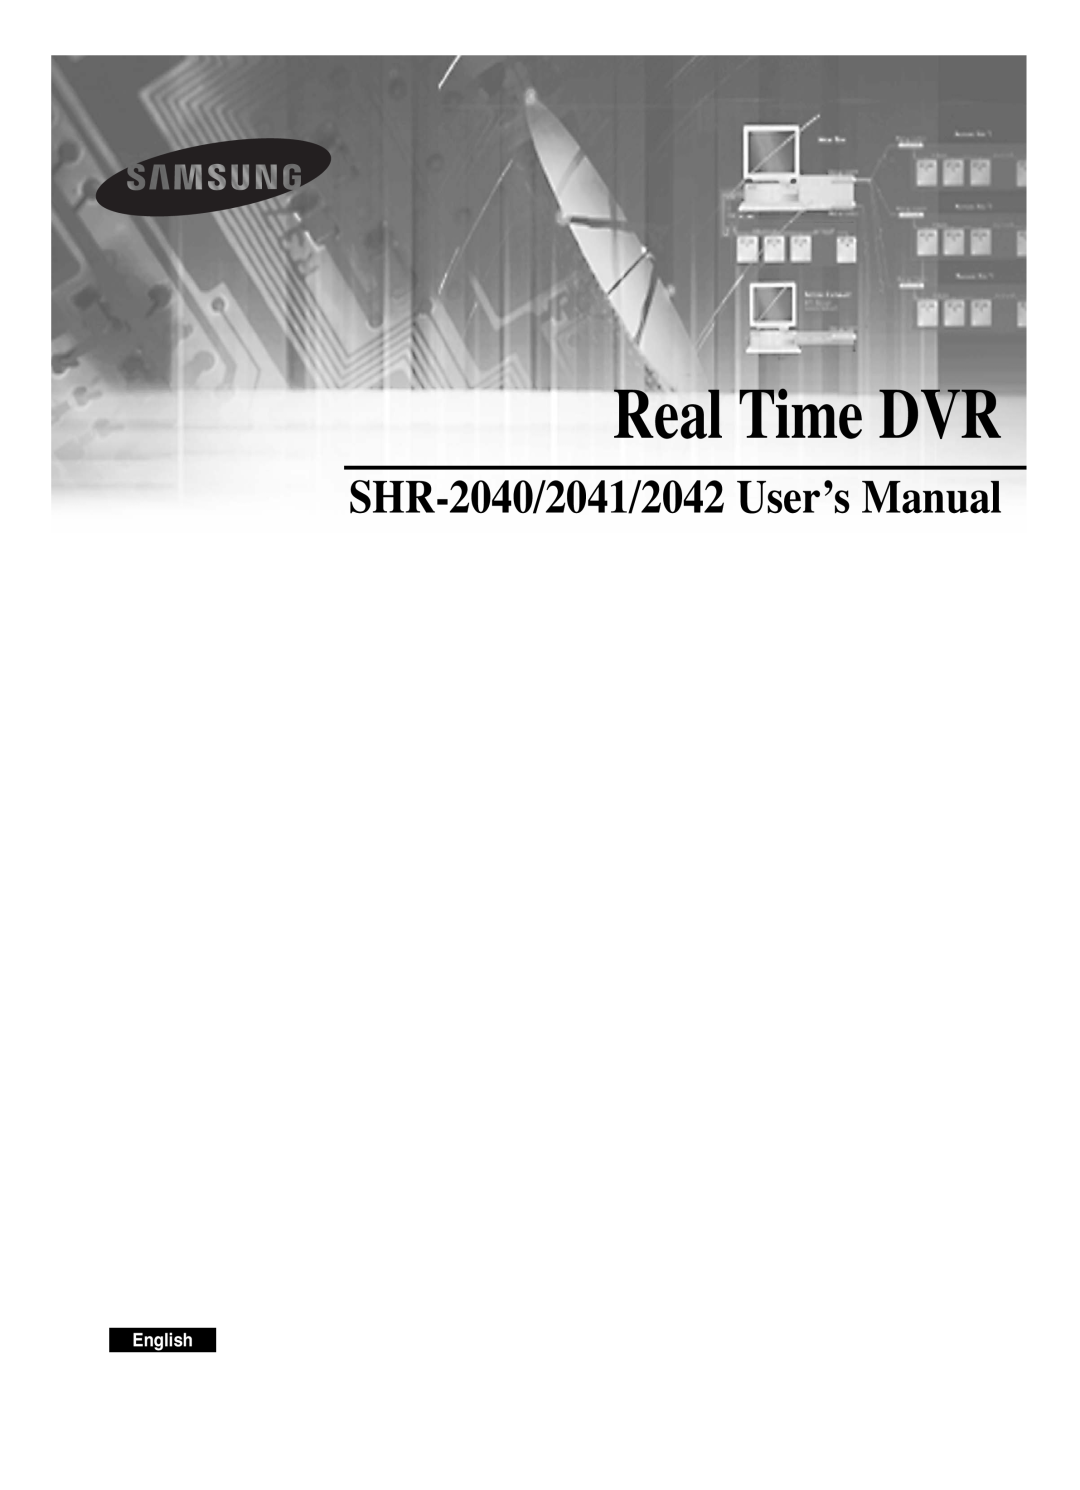 Samsung SHR-2040P250, SHR-2042P250 manual Real Time DVR, SHR-2040/2041/2042 User’s Manual, English 